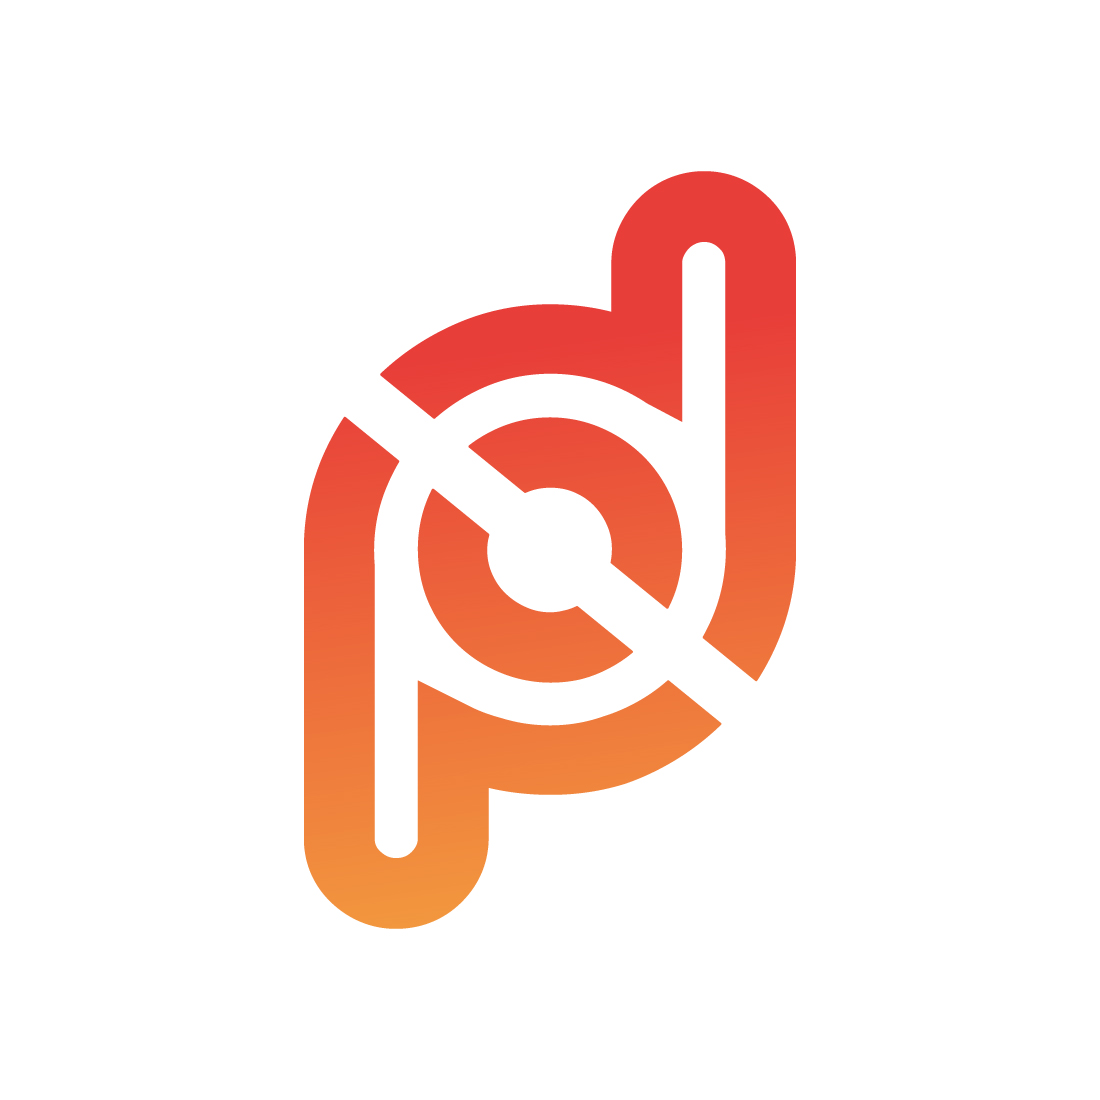 Initials PD letters logo design PD logo template, vector royalty orange color logo preview image.